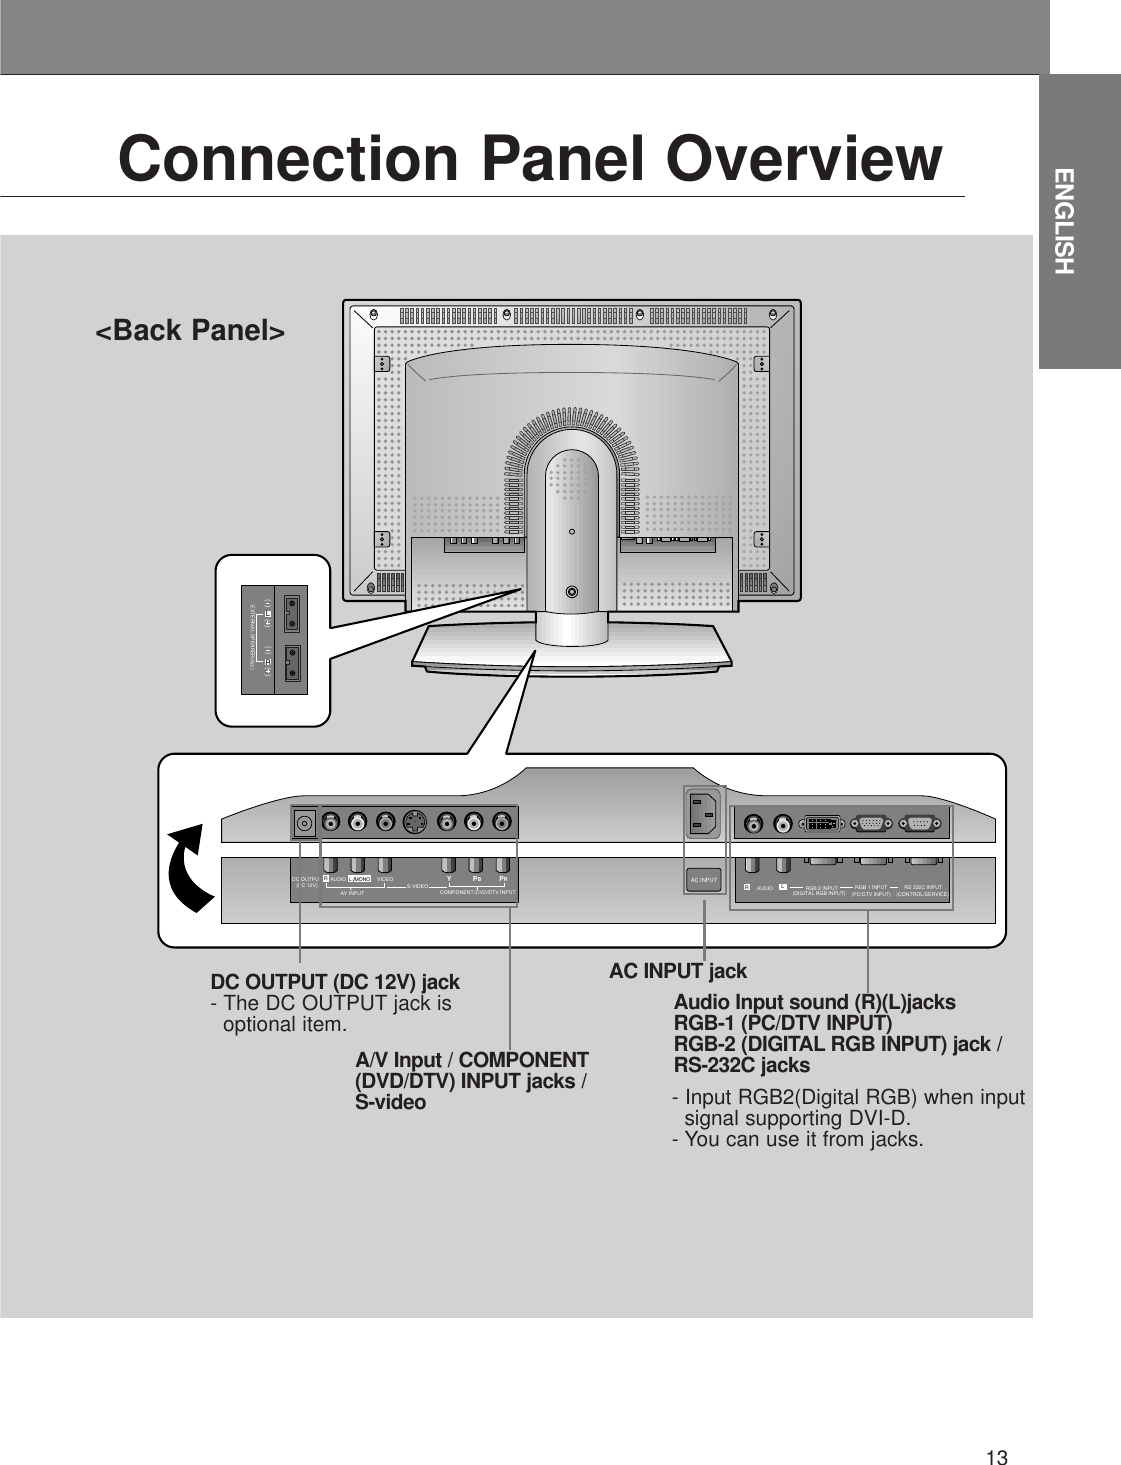 13ENGLISHY PBPR  RLMONOAUDIO VIDEOS-VIDEOAV INPUT COMPONENT (DVD/DTV INPUT)AC INPUTRLAUDIO RGB 2 INPUT(DIGITAL RGB INPUT) RGB 1 INPUT(PC/DTV INPUT) RS 232C INPUT(CONTROL/SERVICE)DC OUTPUT(DC 12V)(  ) (  )(  ) (  )RLΩEXTERNAL SPEAKER(6    )&lt;Back Panel&gt;Connection Panel OverviewA/V Input / COMPONENT(DVD/DTV) INPUT jacks / S-videoAudio Input sound (R)(L)jacksRGB-1 (PC/DTV INPUT)RGB-2 (DIGITAL RGB INPUT) jack /RS-232C jacksAC INPUT jack- Input RGB2(Digital RGB) when input signal supporting DVI-D.- You can use it from jacks.DC OUTPUT (DC 12V) jack- The DC OUTPUT jack is optional item.